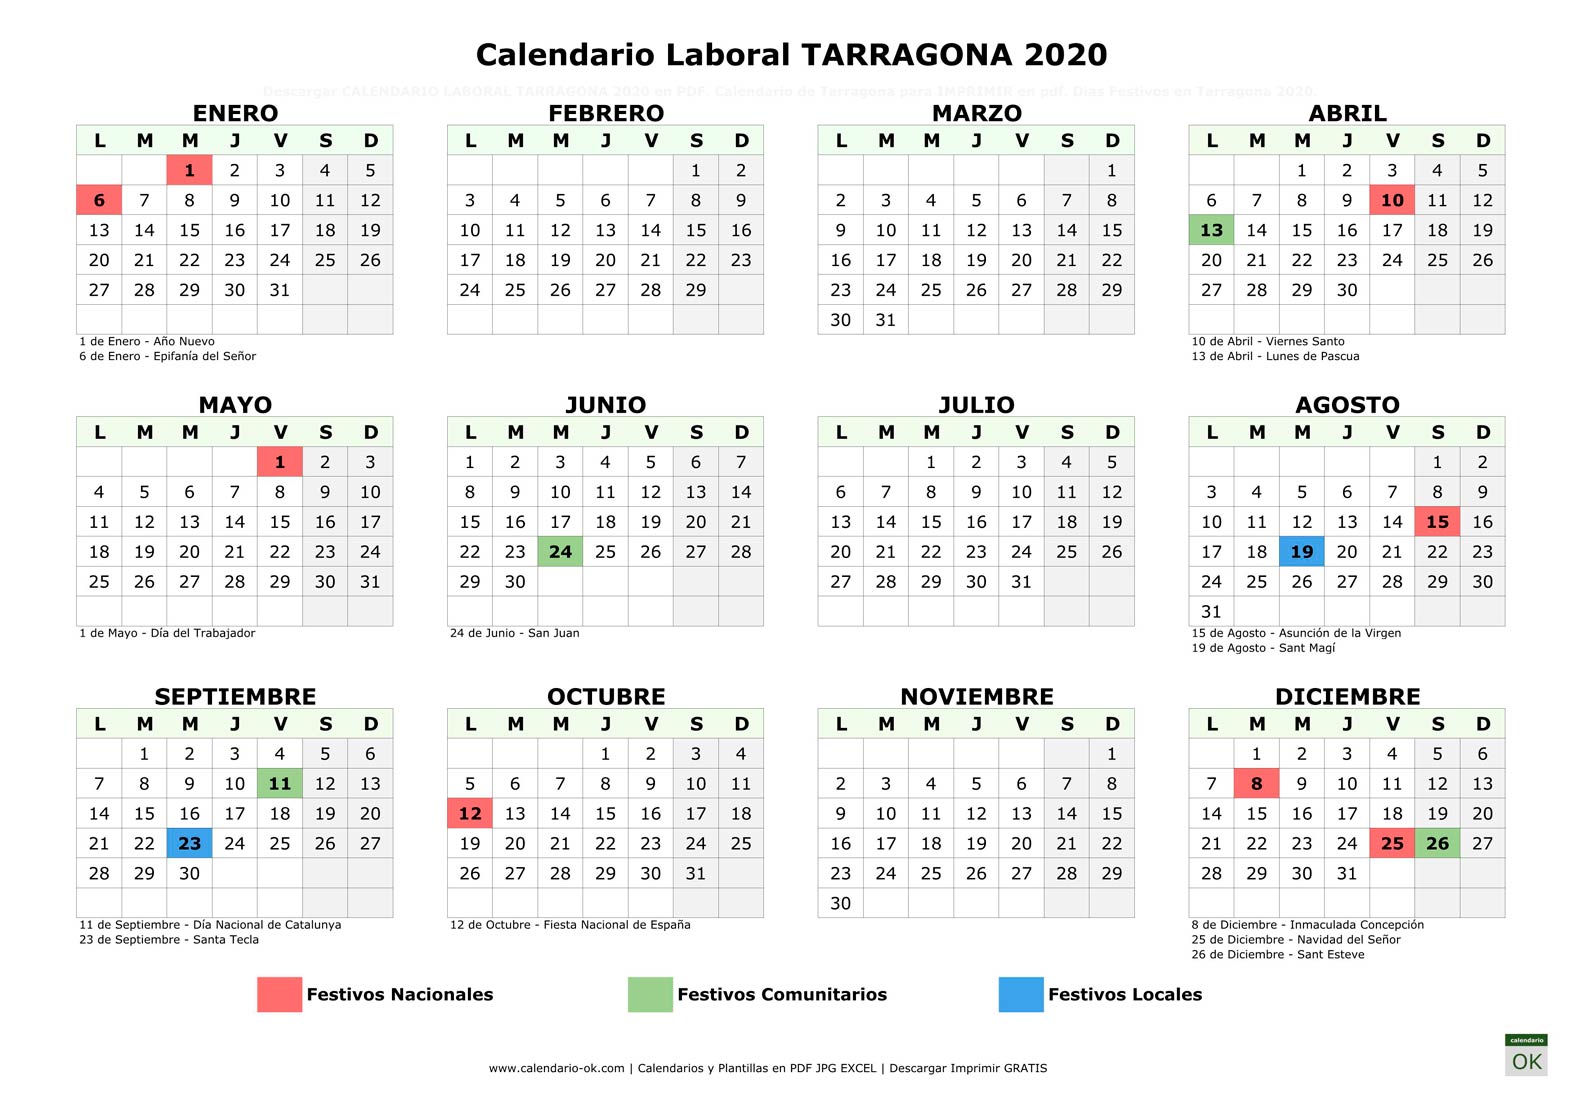 Calendario Laboral TARRAGONA 2020 horizontal